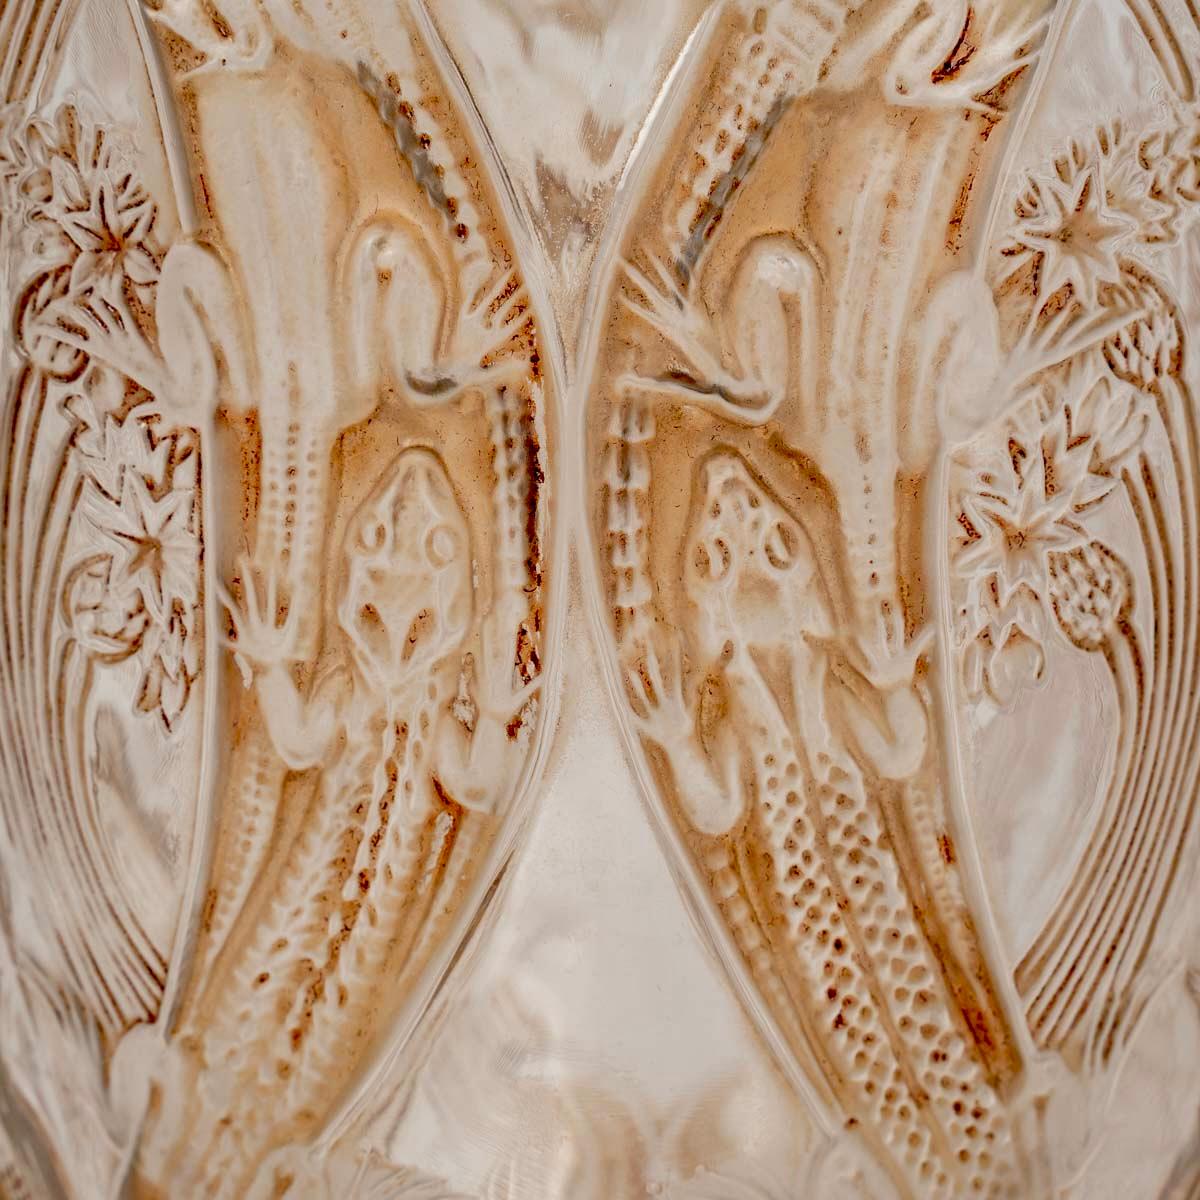 Molded 1913 Rene Lalique Vase Lezards et Bluets Glass with Sepia Patina